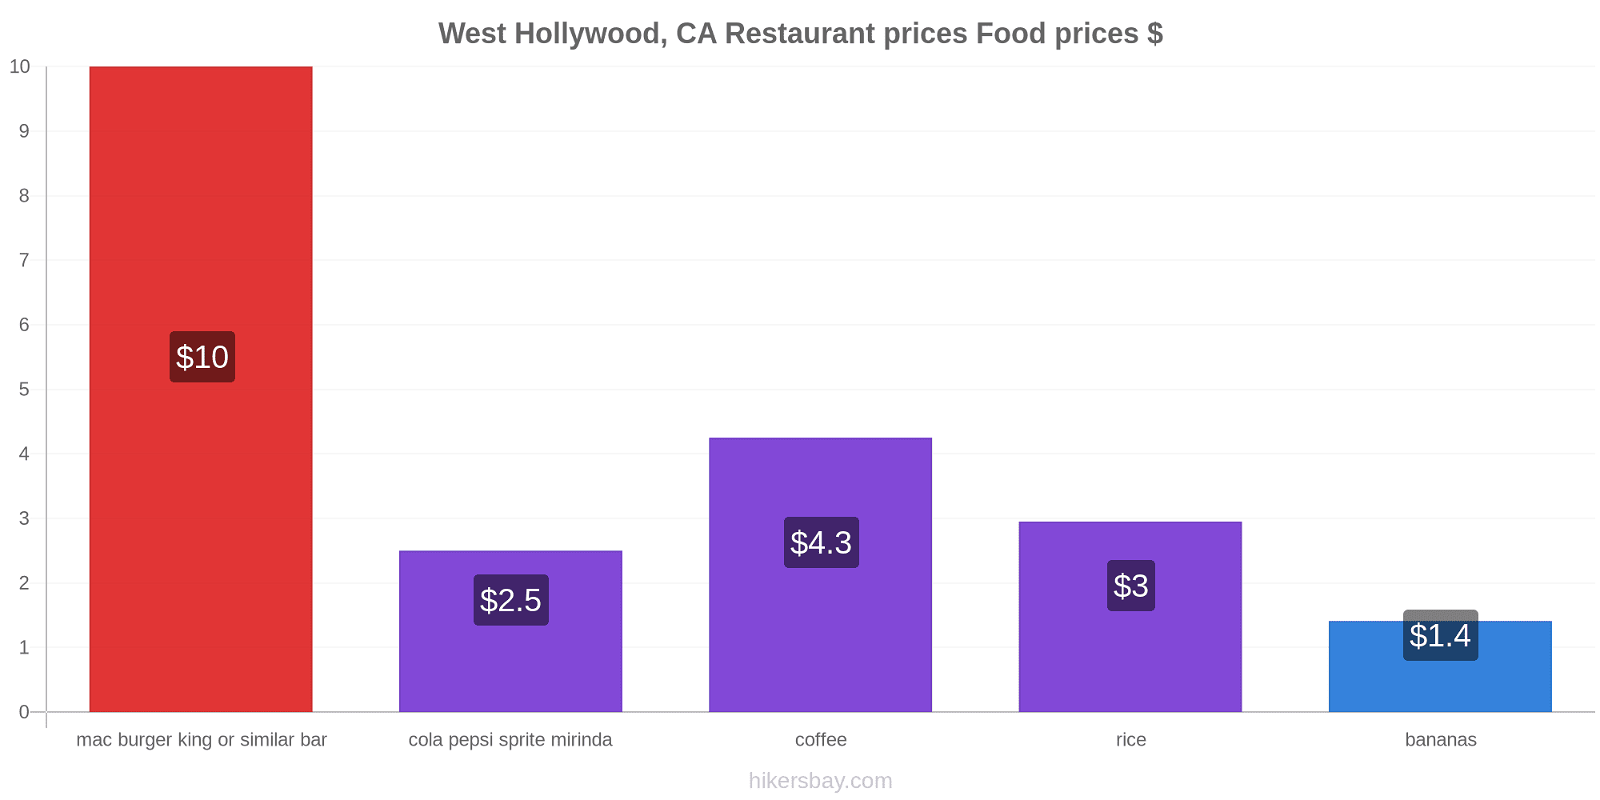 West Hollywood, CA price changes hikersbay.com